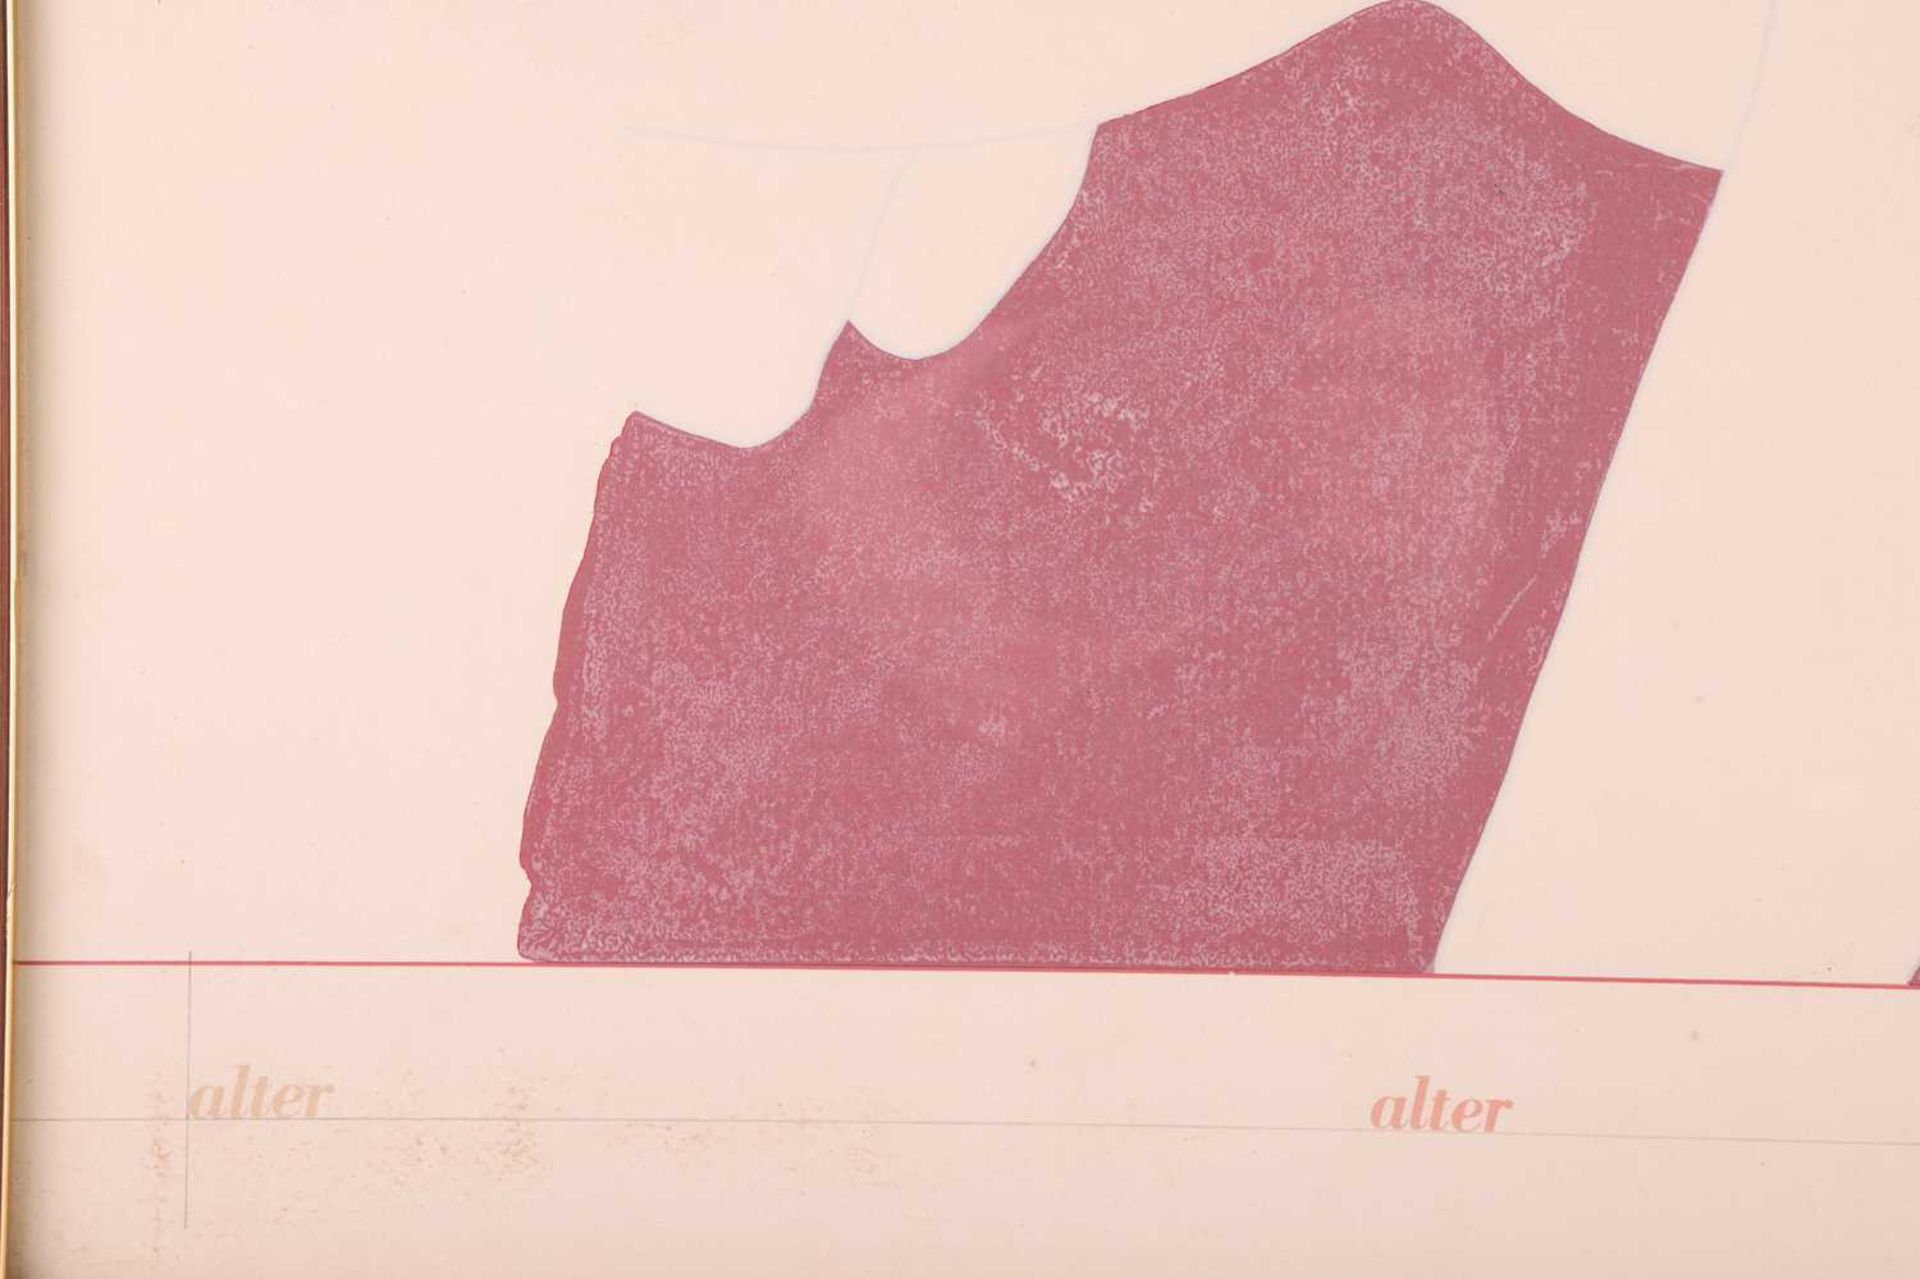 Derrick Greaves (1927-2002), 'Alter Alter Also There', screenprint, unsigned, 46 cm x 62 cm, framed  - Bild 2 aus 5